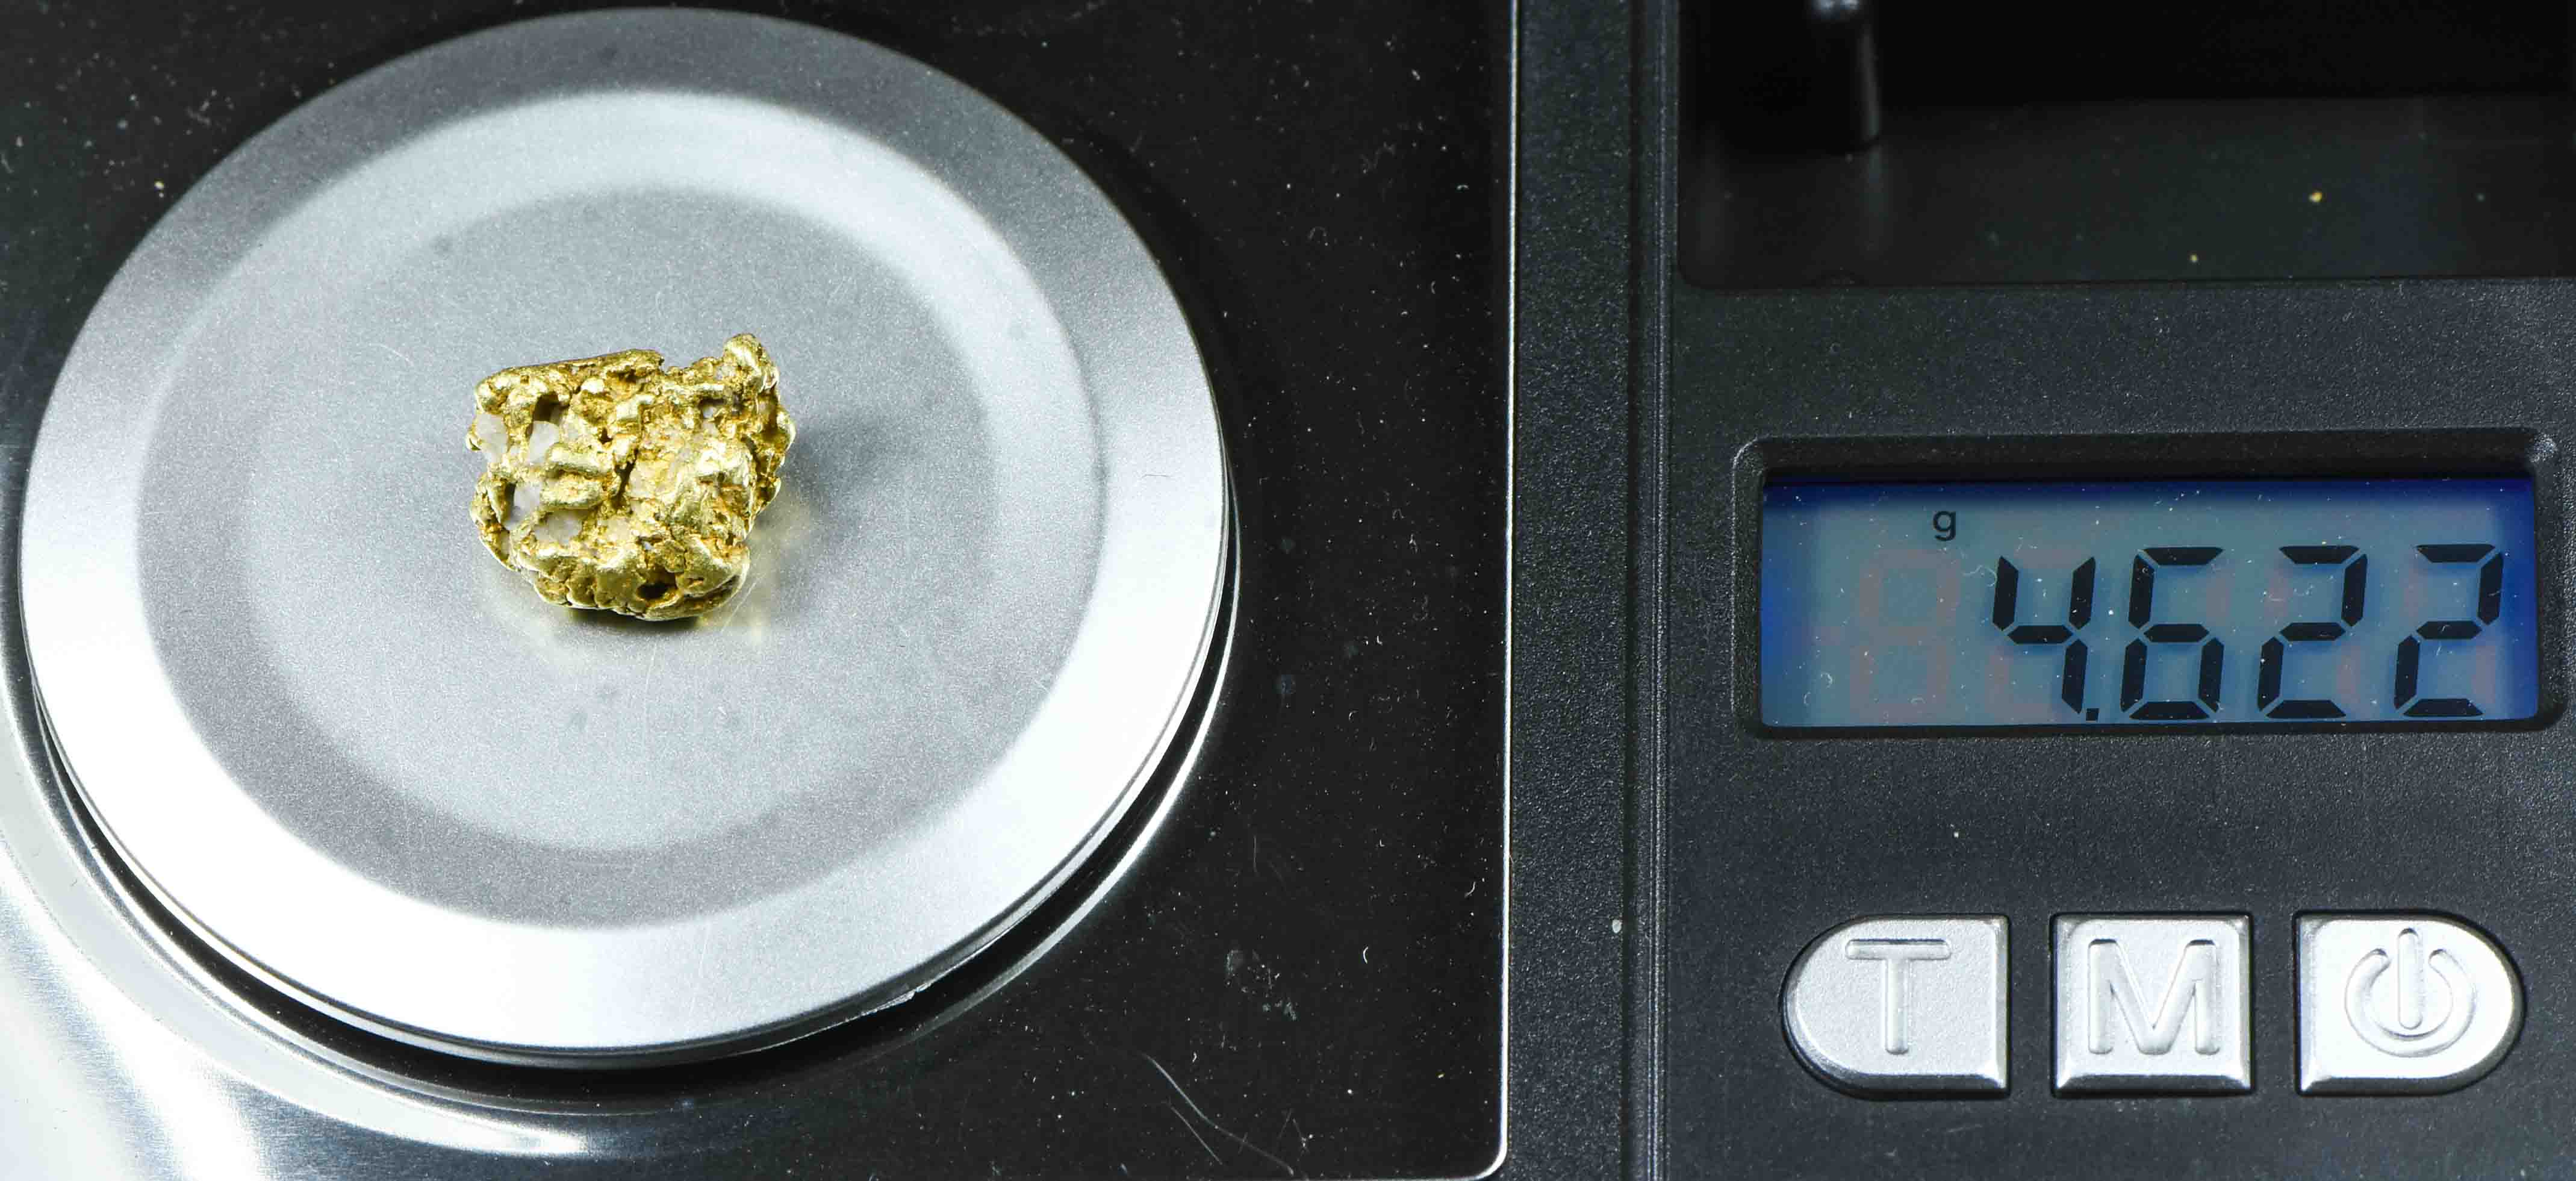 QN-20 "Alaskan BC Gold Nuggets with Quartz" Genuine 4.62 Grams